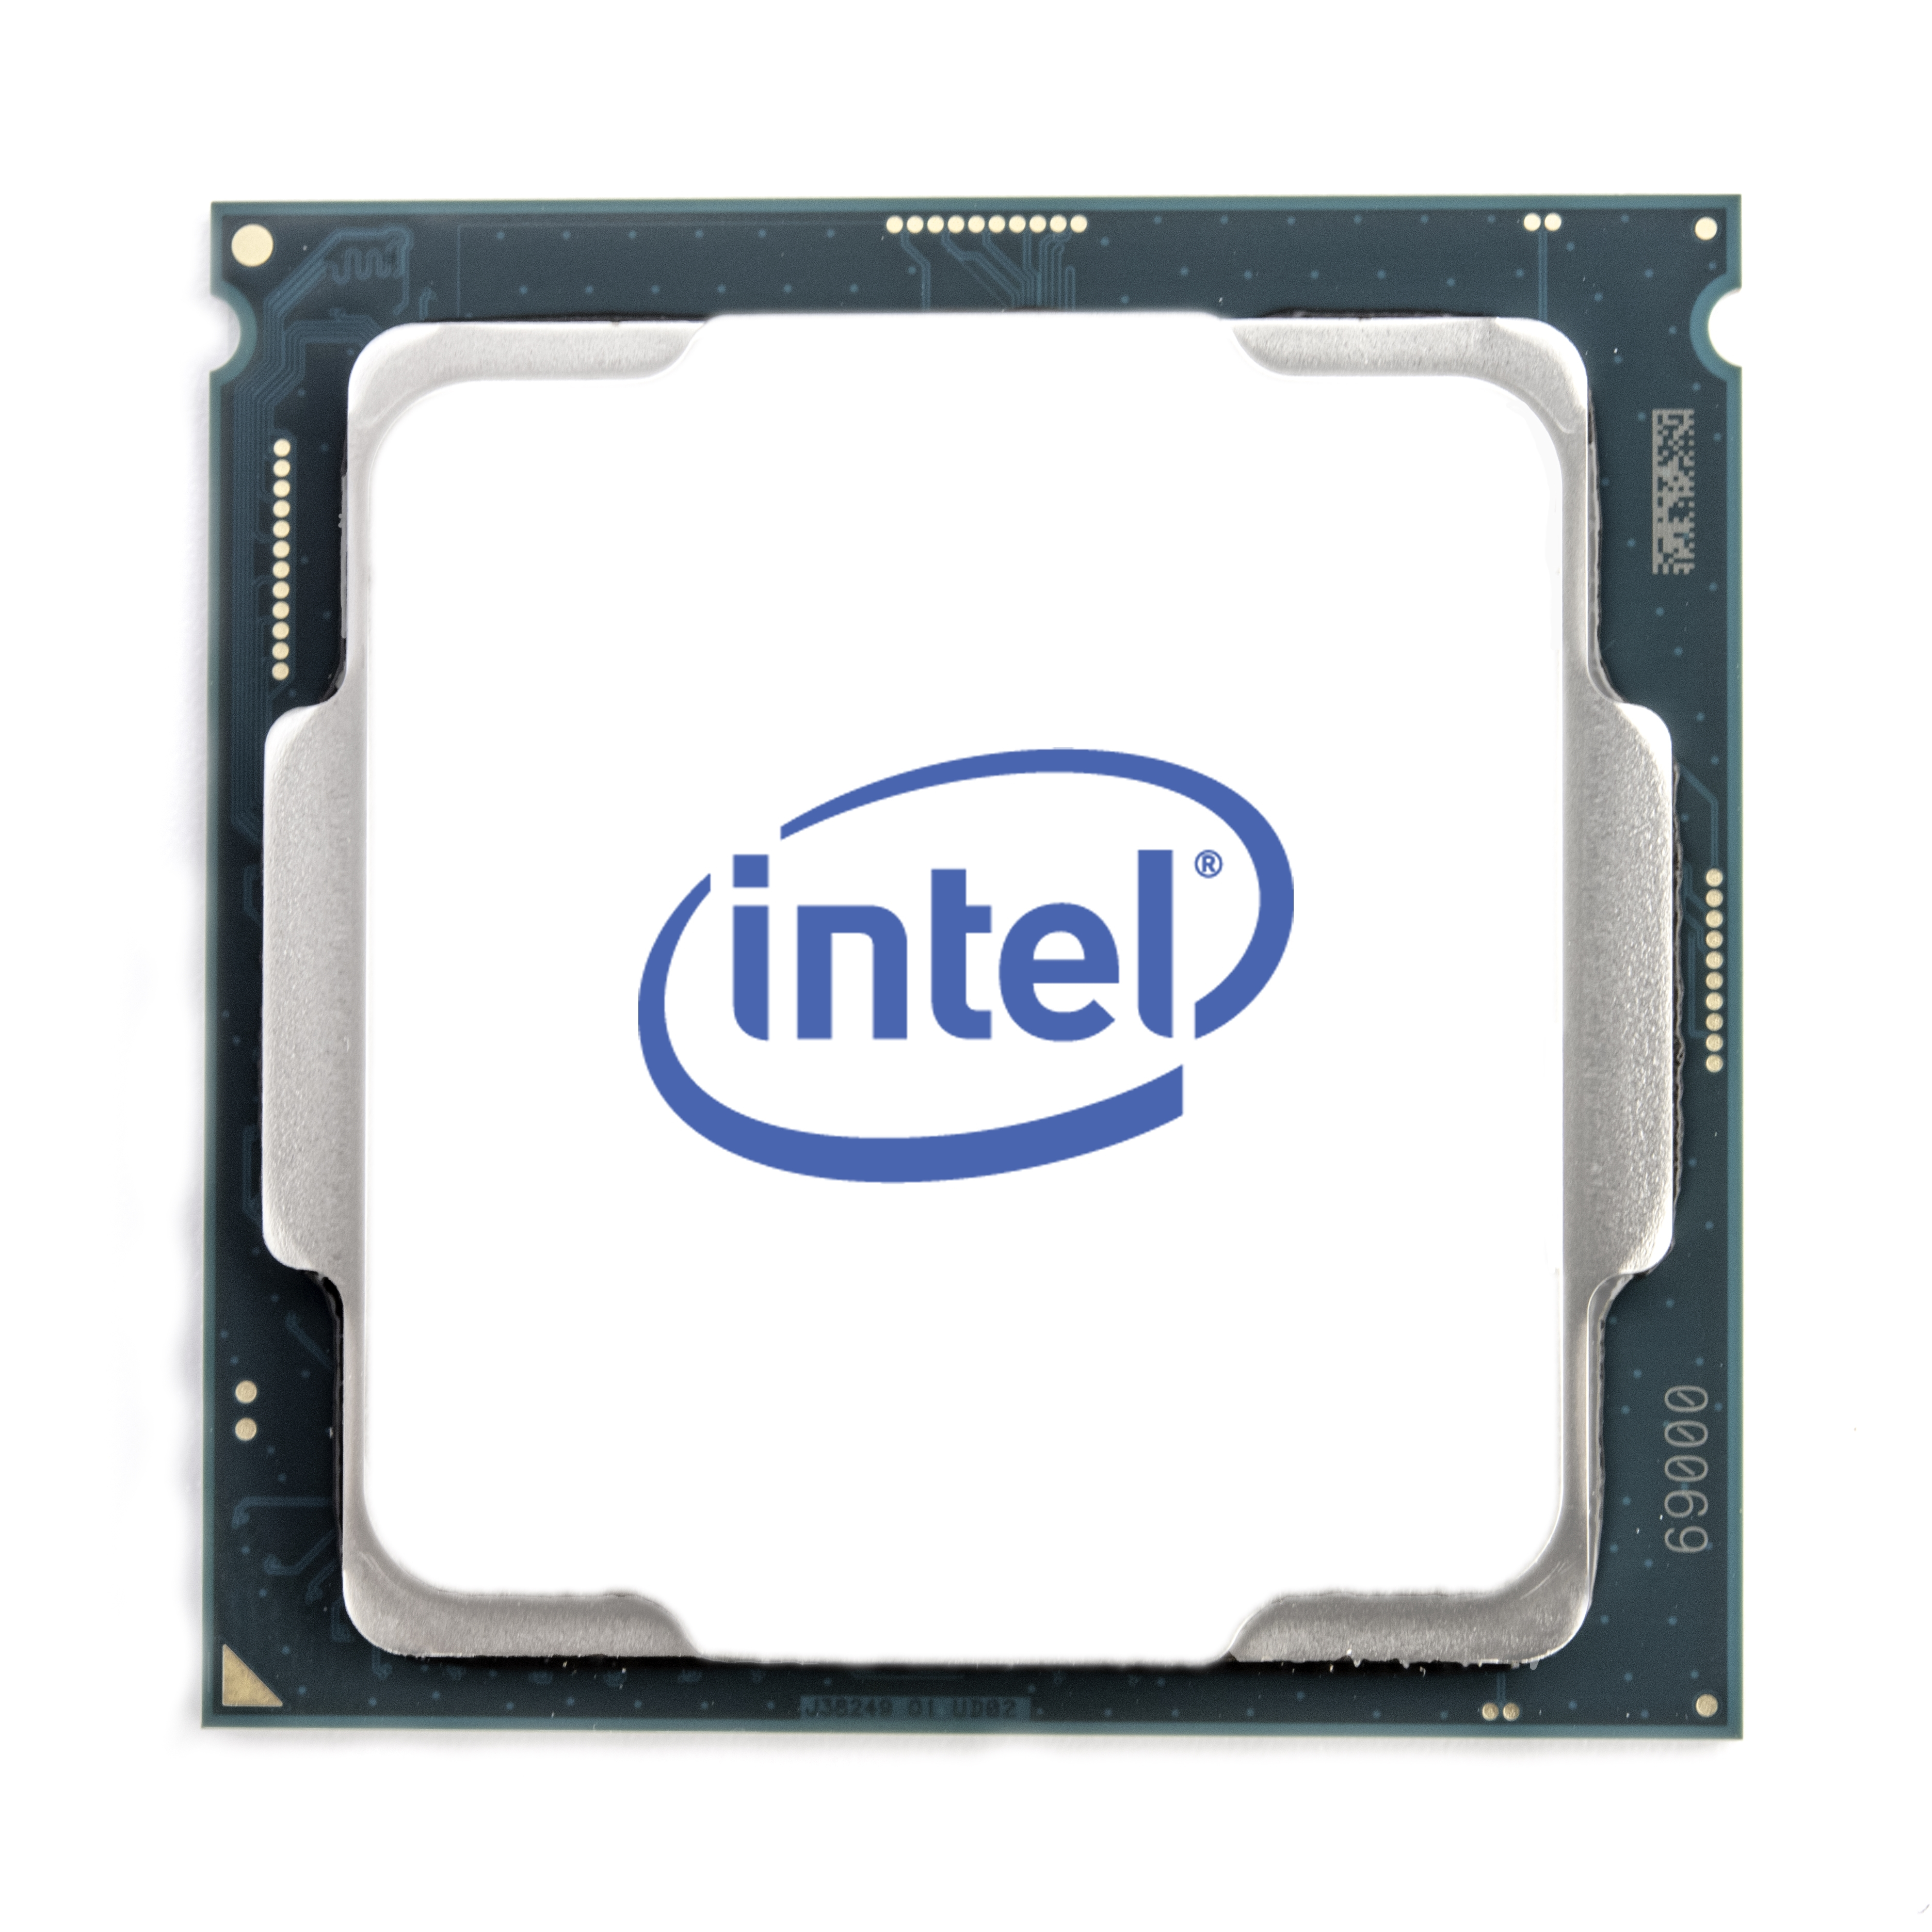 Intel Core i3-10300